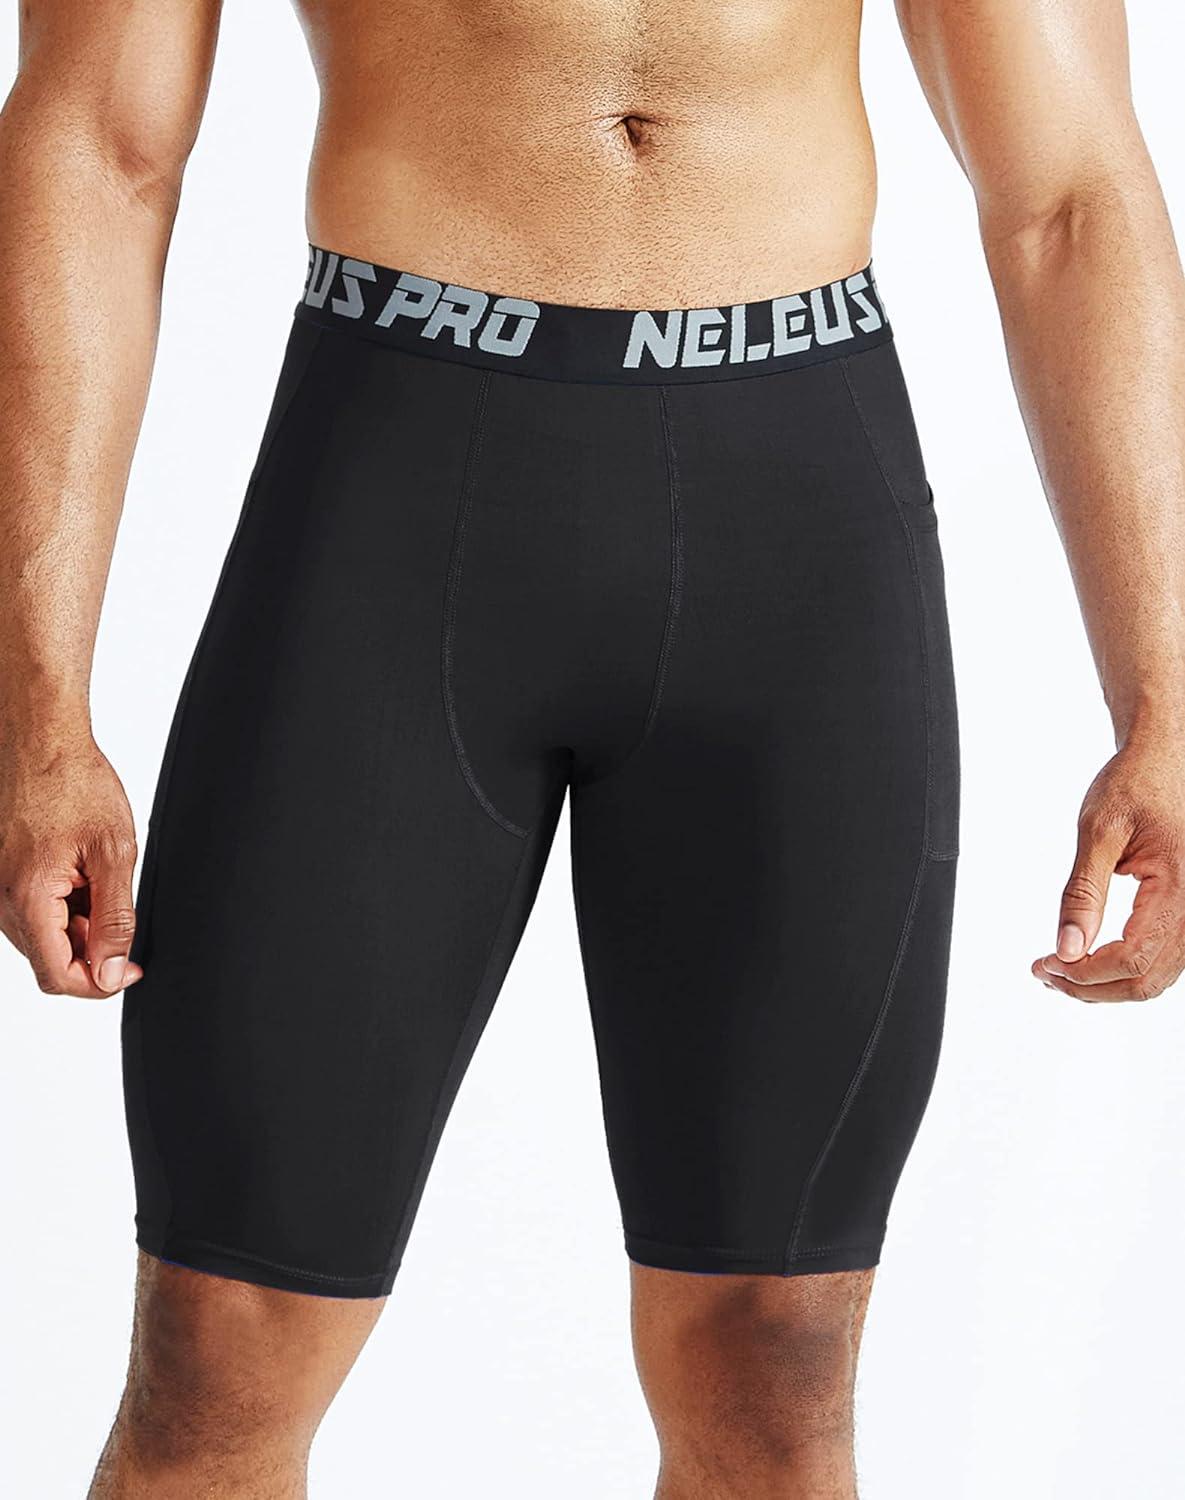 NELEUS Men's Compression Short with Pocket Dry Fit Yoga Shorts Pack of 3  Medium 6063 Black/Grey/Navy Blue 3 Pack